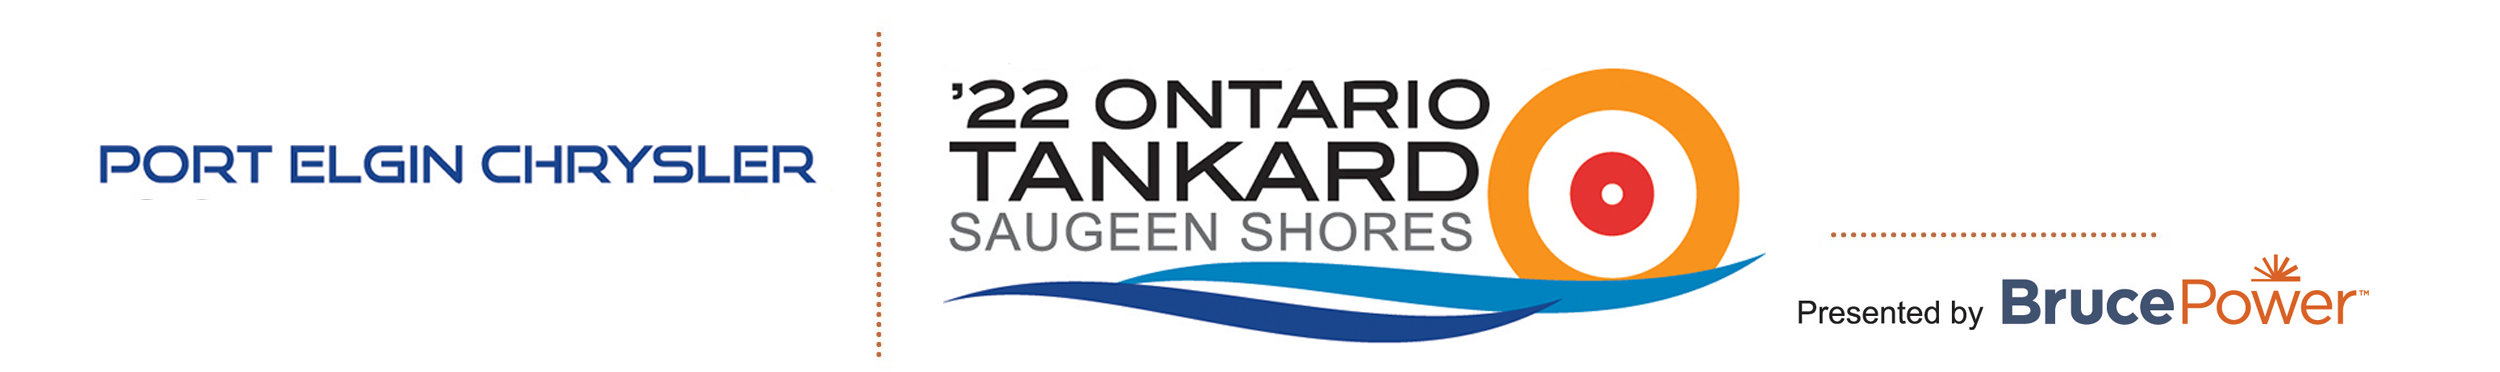 tankard logo horizontal